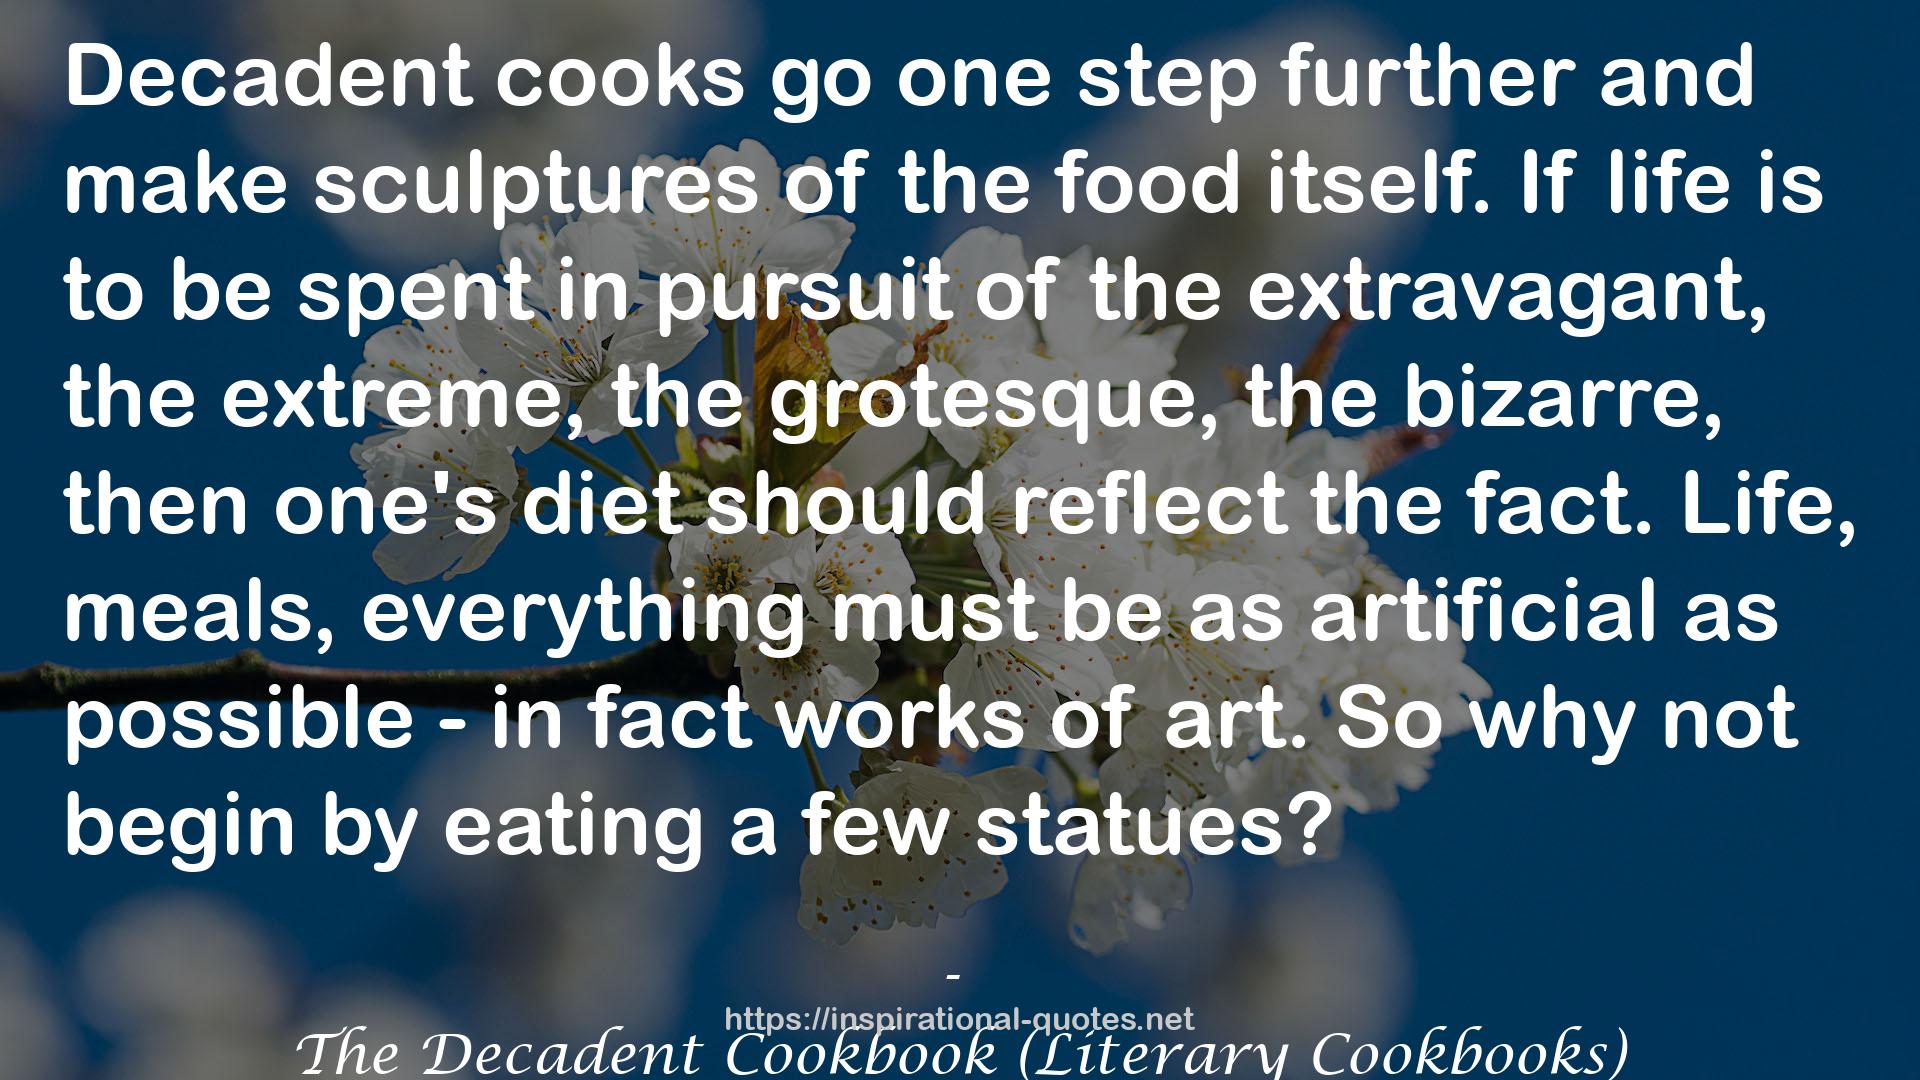 The Decadent Cookbook (Literary Cookbooks) QUOTES